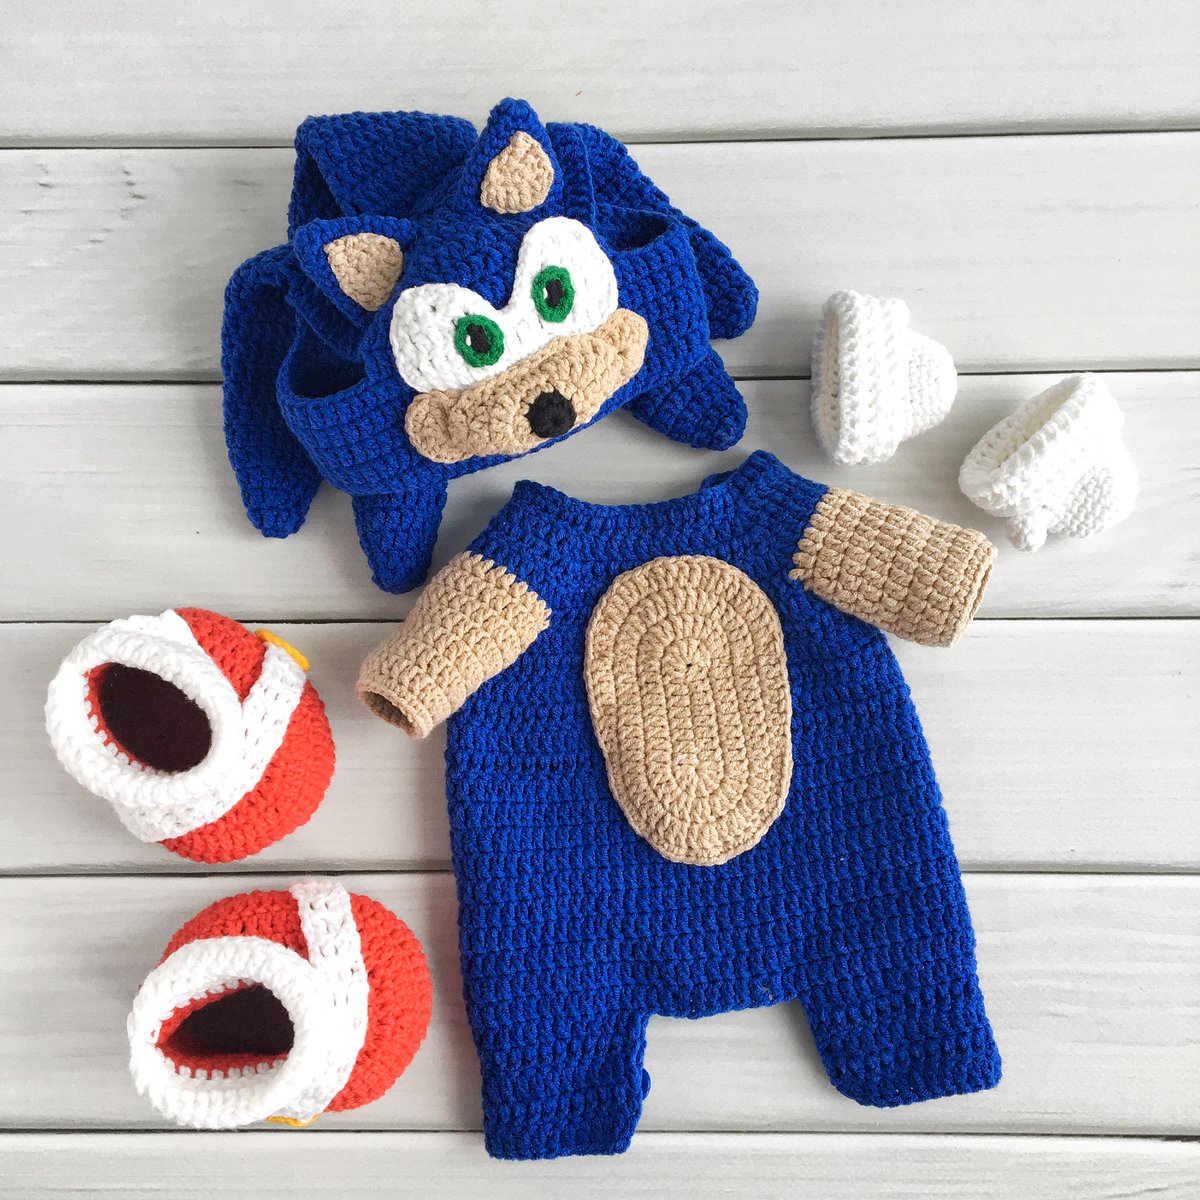 💙 Hedgehog outfit pattern ➡️ shop.amigurumi.today/product/hedgeh…

🐰 Bunny pattern ➡️ shop.amigurumi.today/product/amigur…

#amigurumi #crochet #amigurumipatterns #crochetpatterns #handmade #crafting